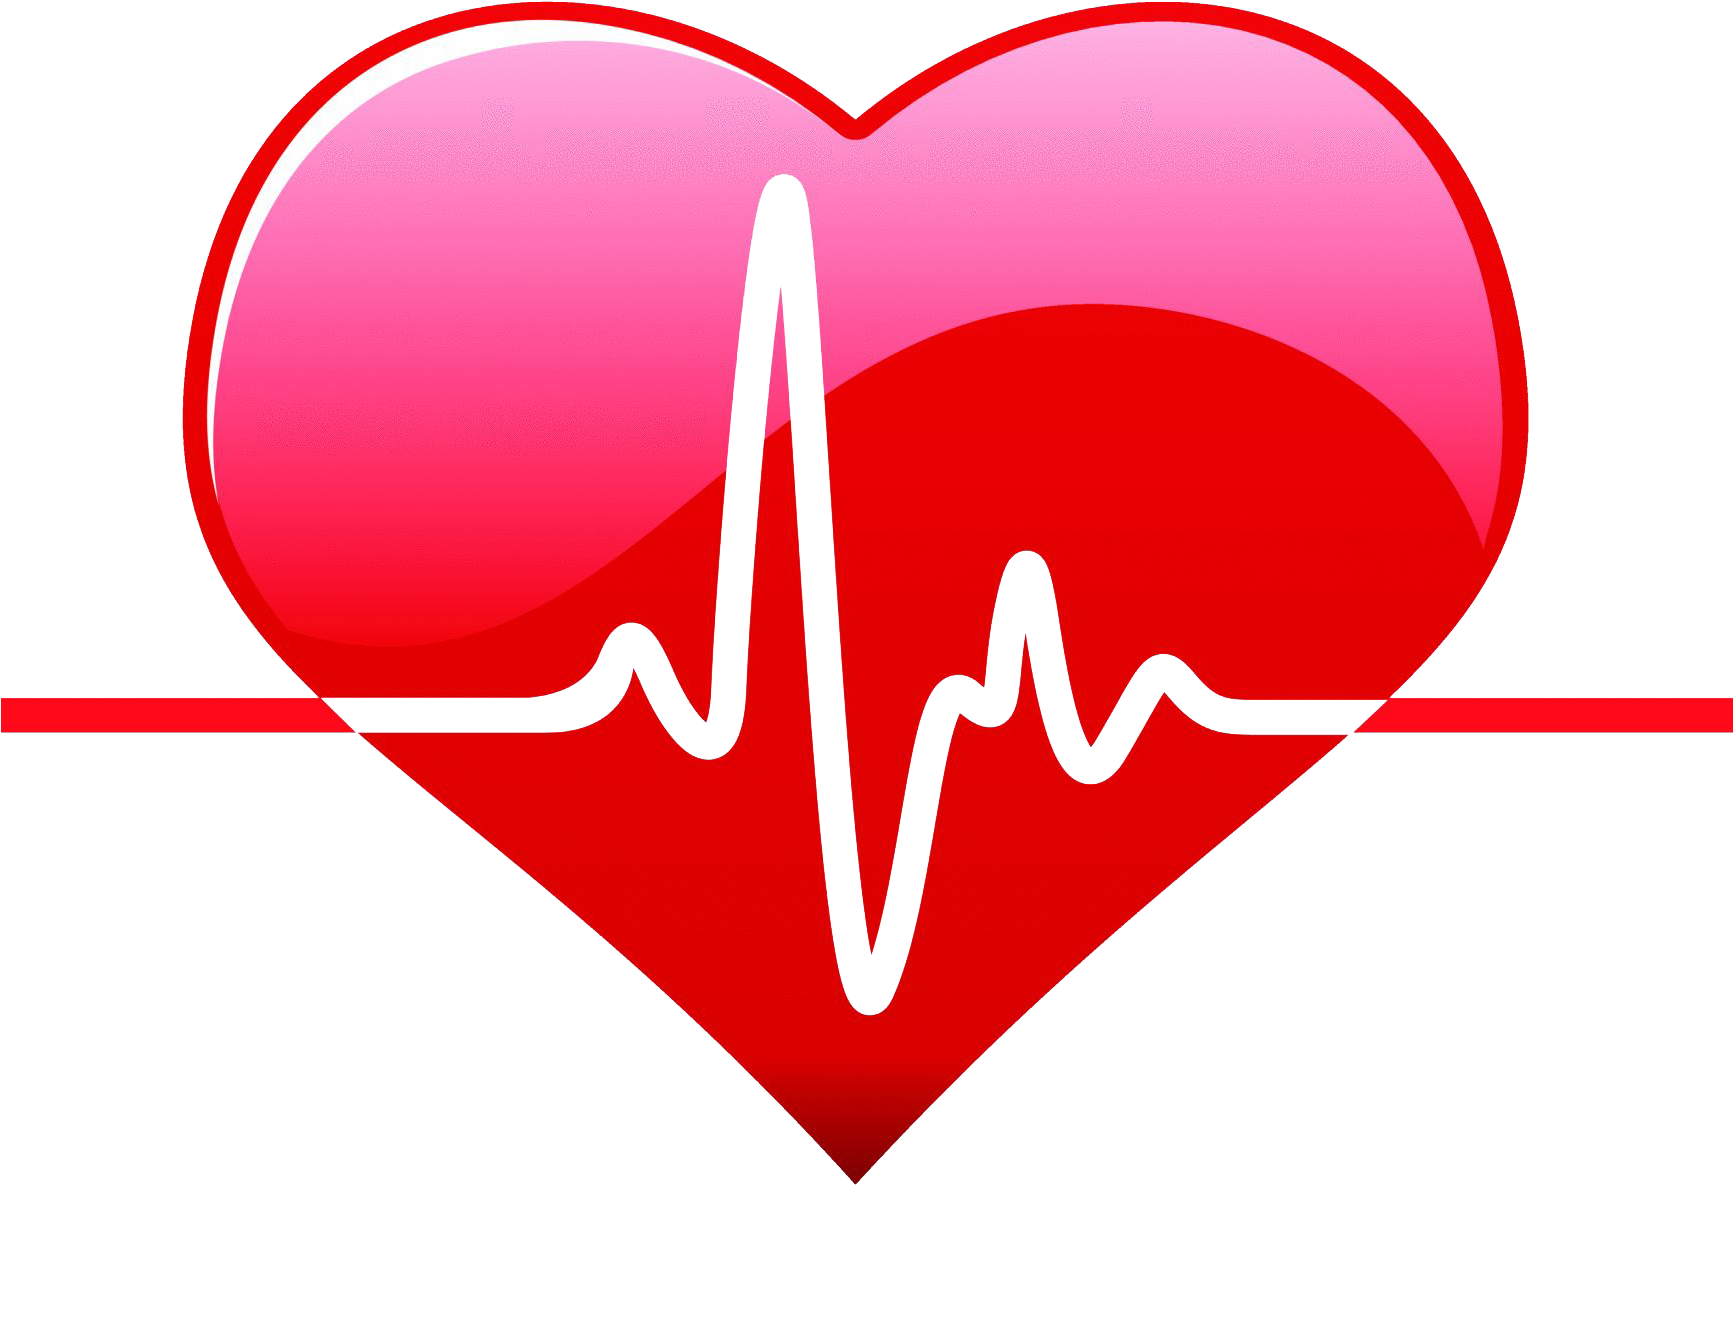 Special Disease Insurance - Wellness Heart (1732x1732)